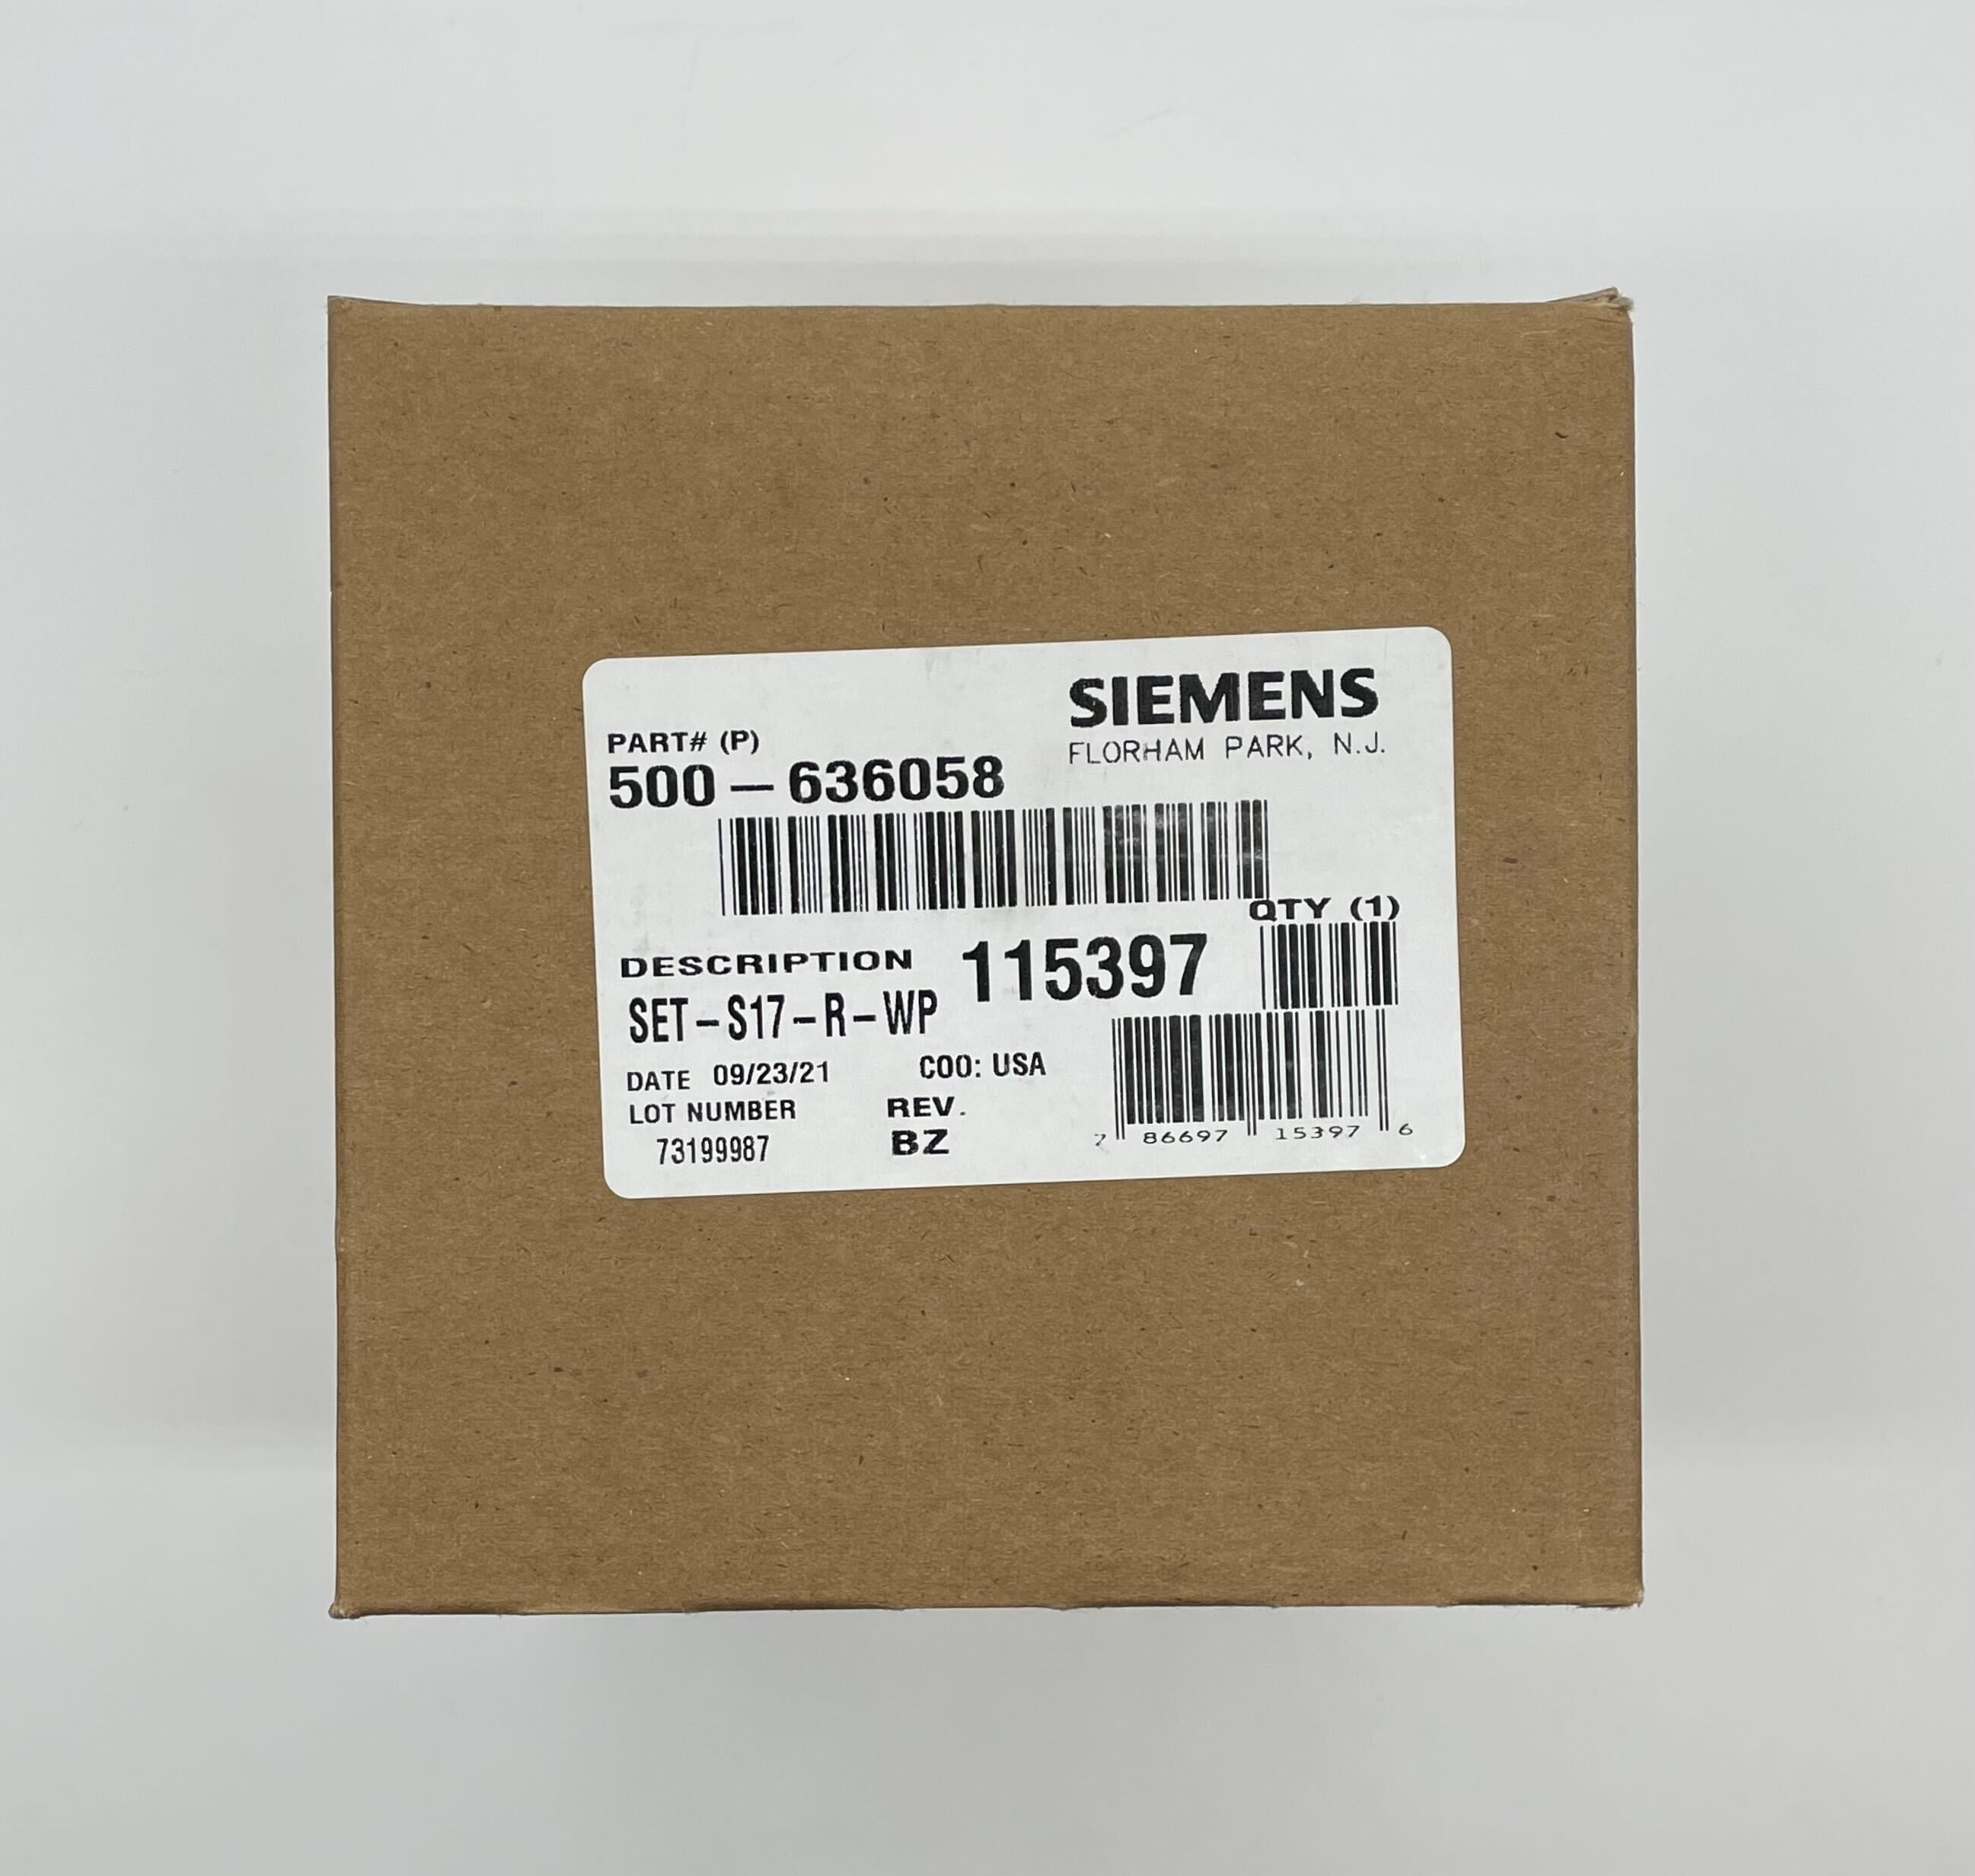 Siemens SET-S17-R-WP